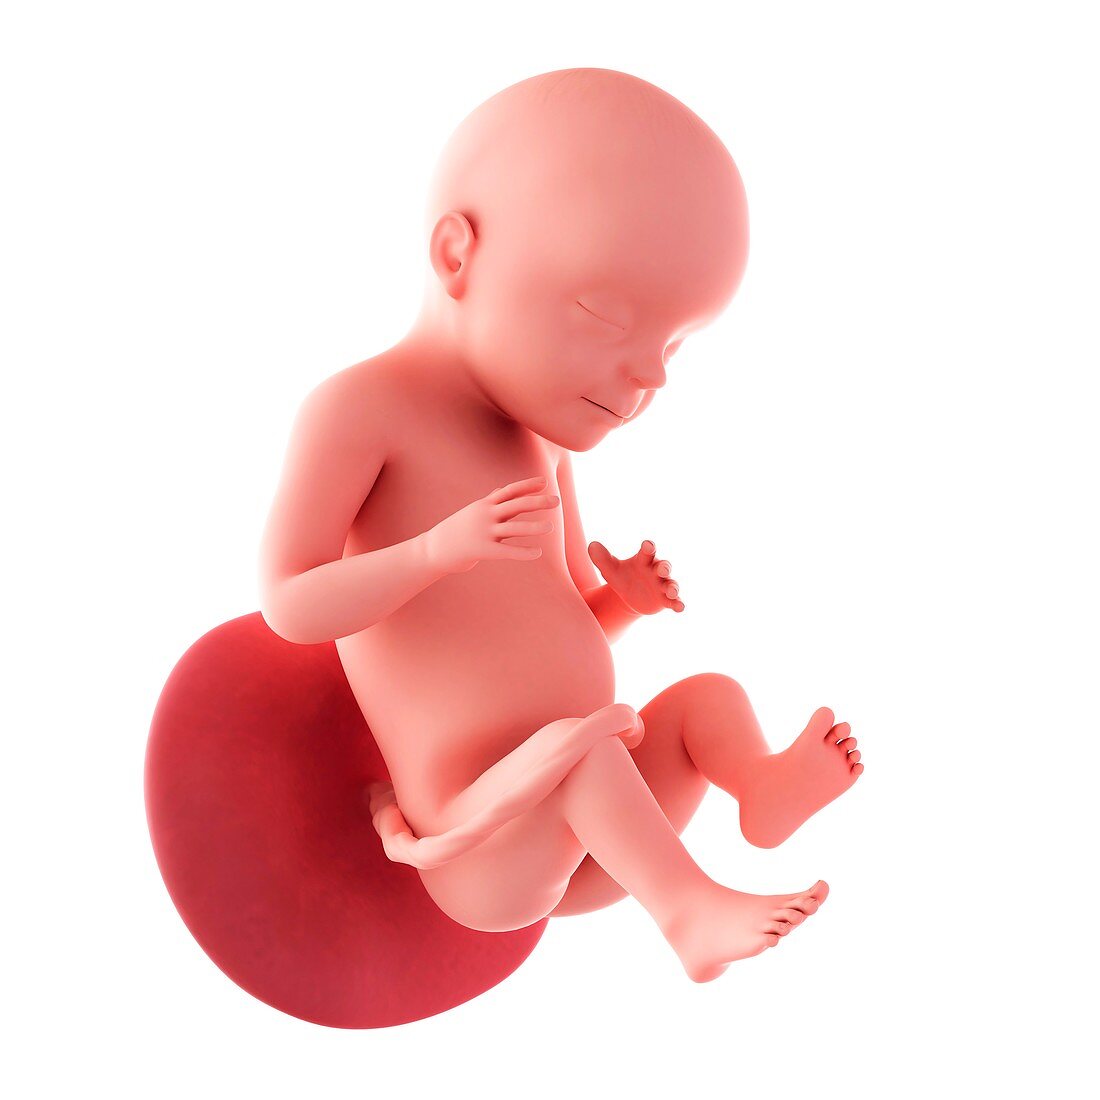 Human fetus age 28 weeks